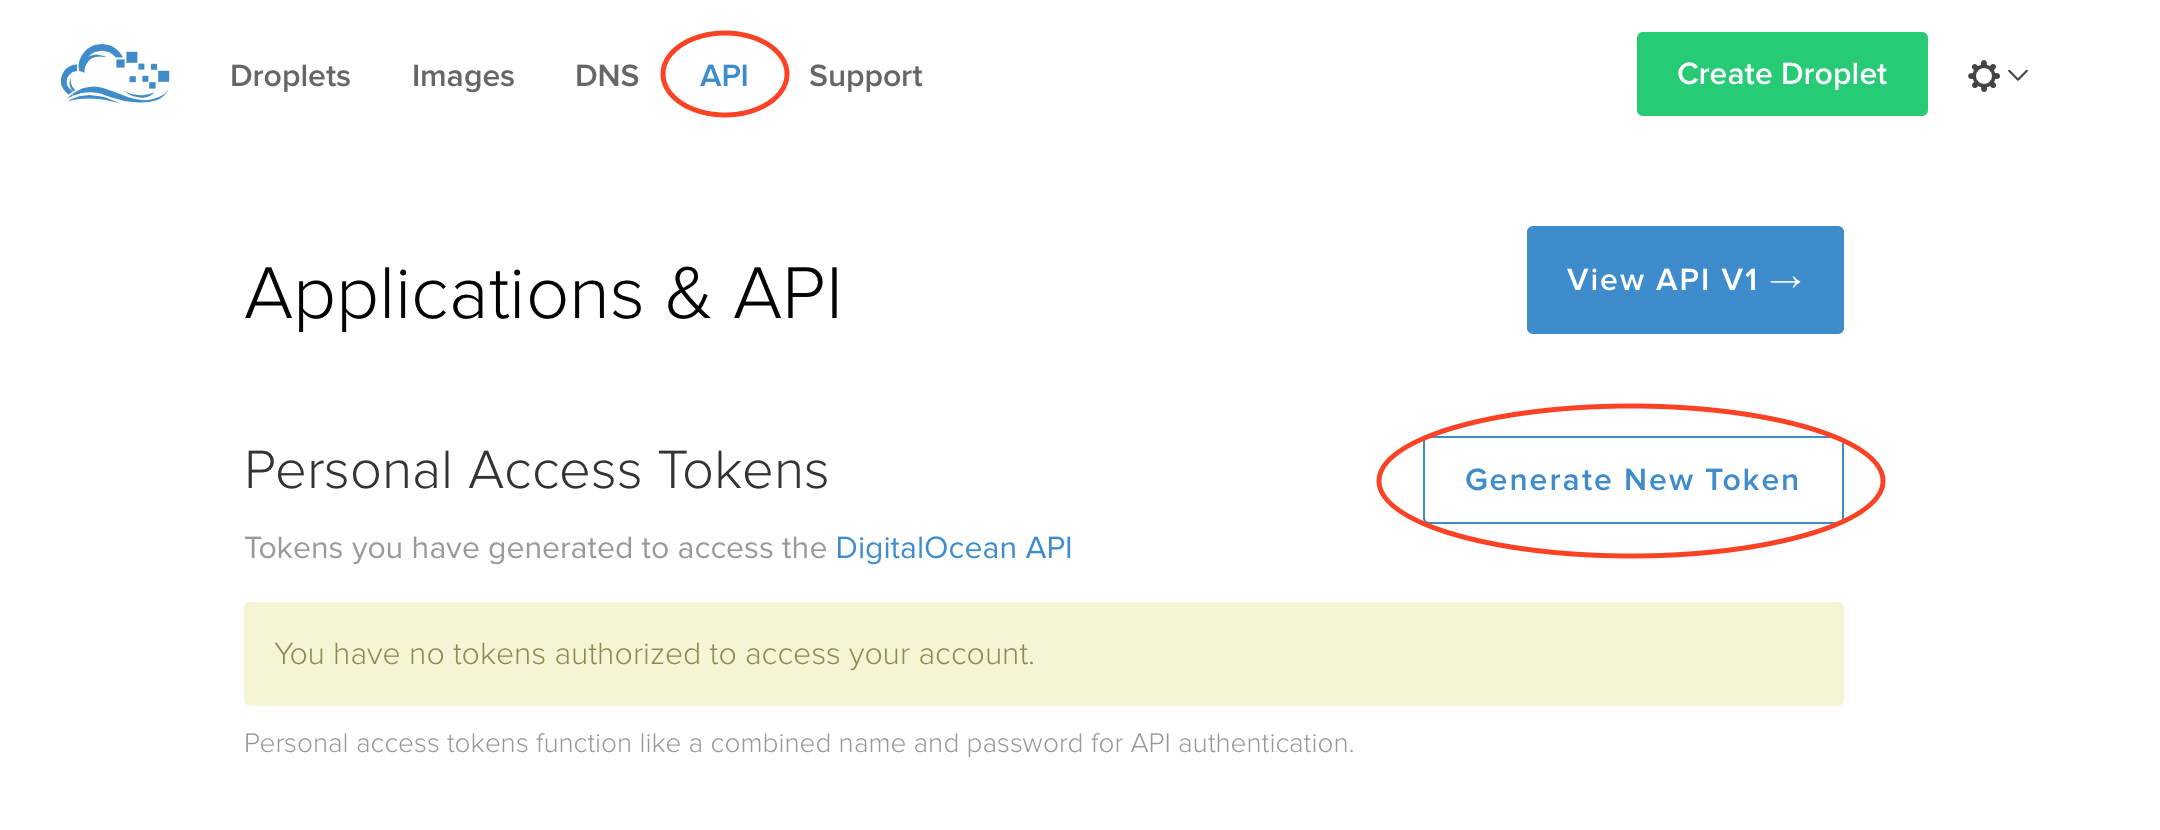 The DigitalOcean API UI